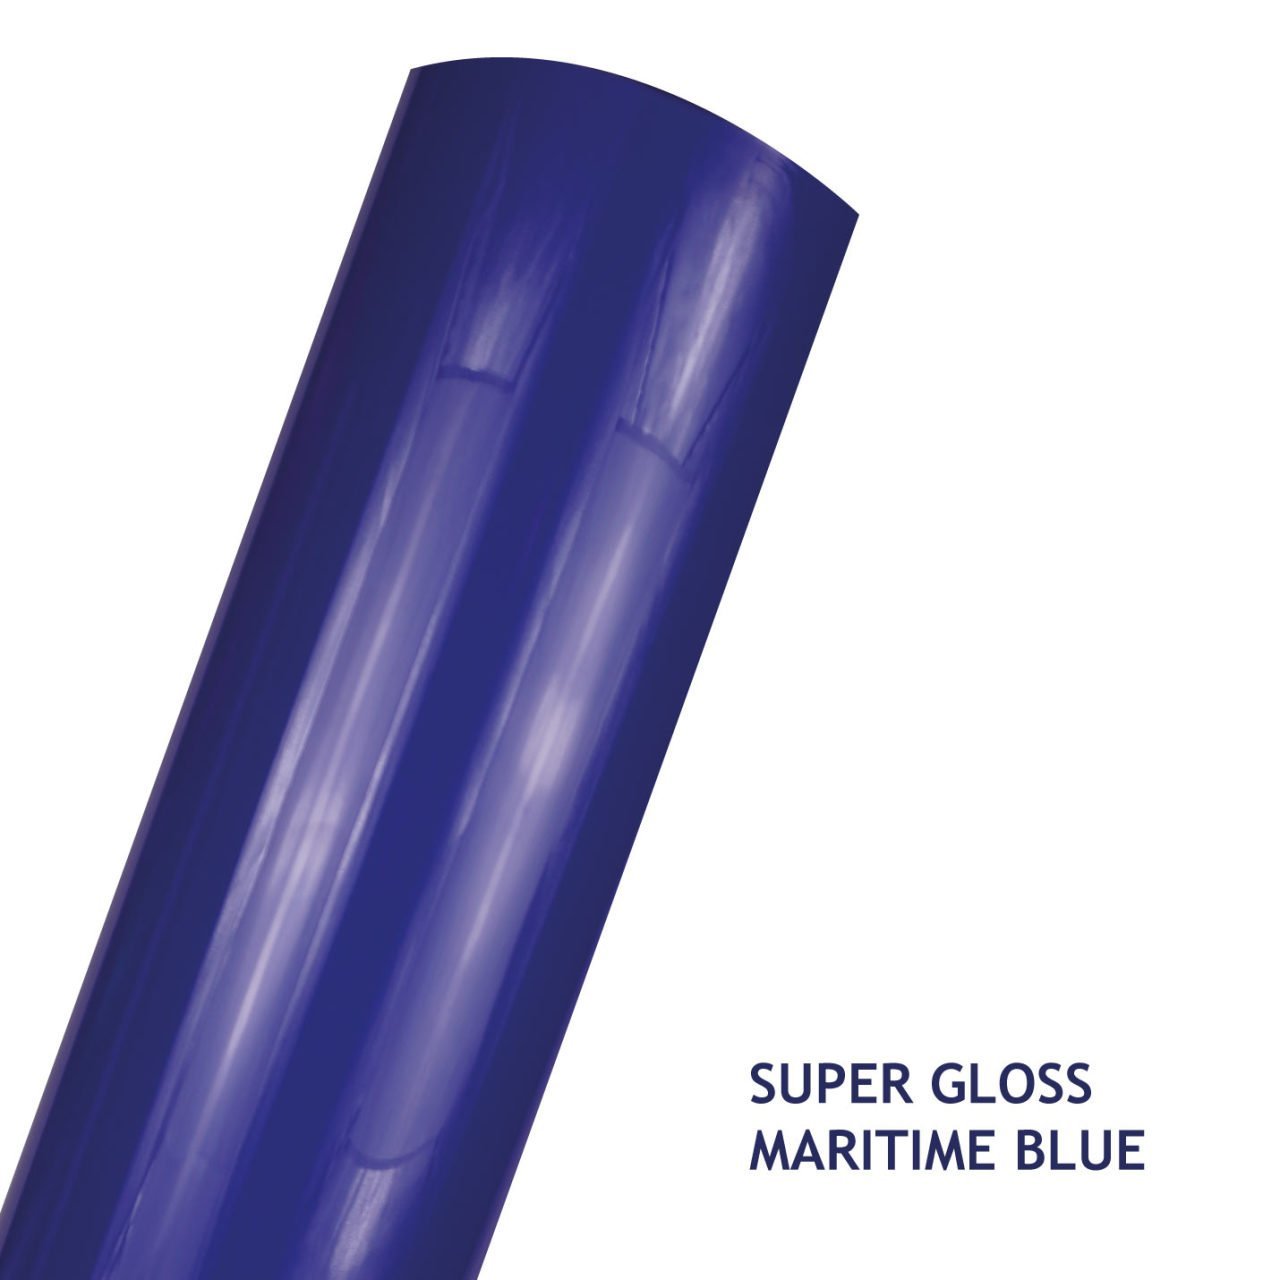 SUPER GLOSS MARITIME BLUE